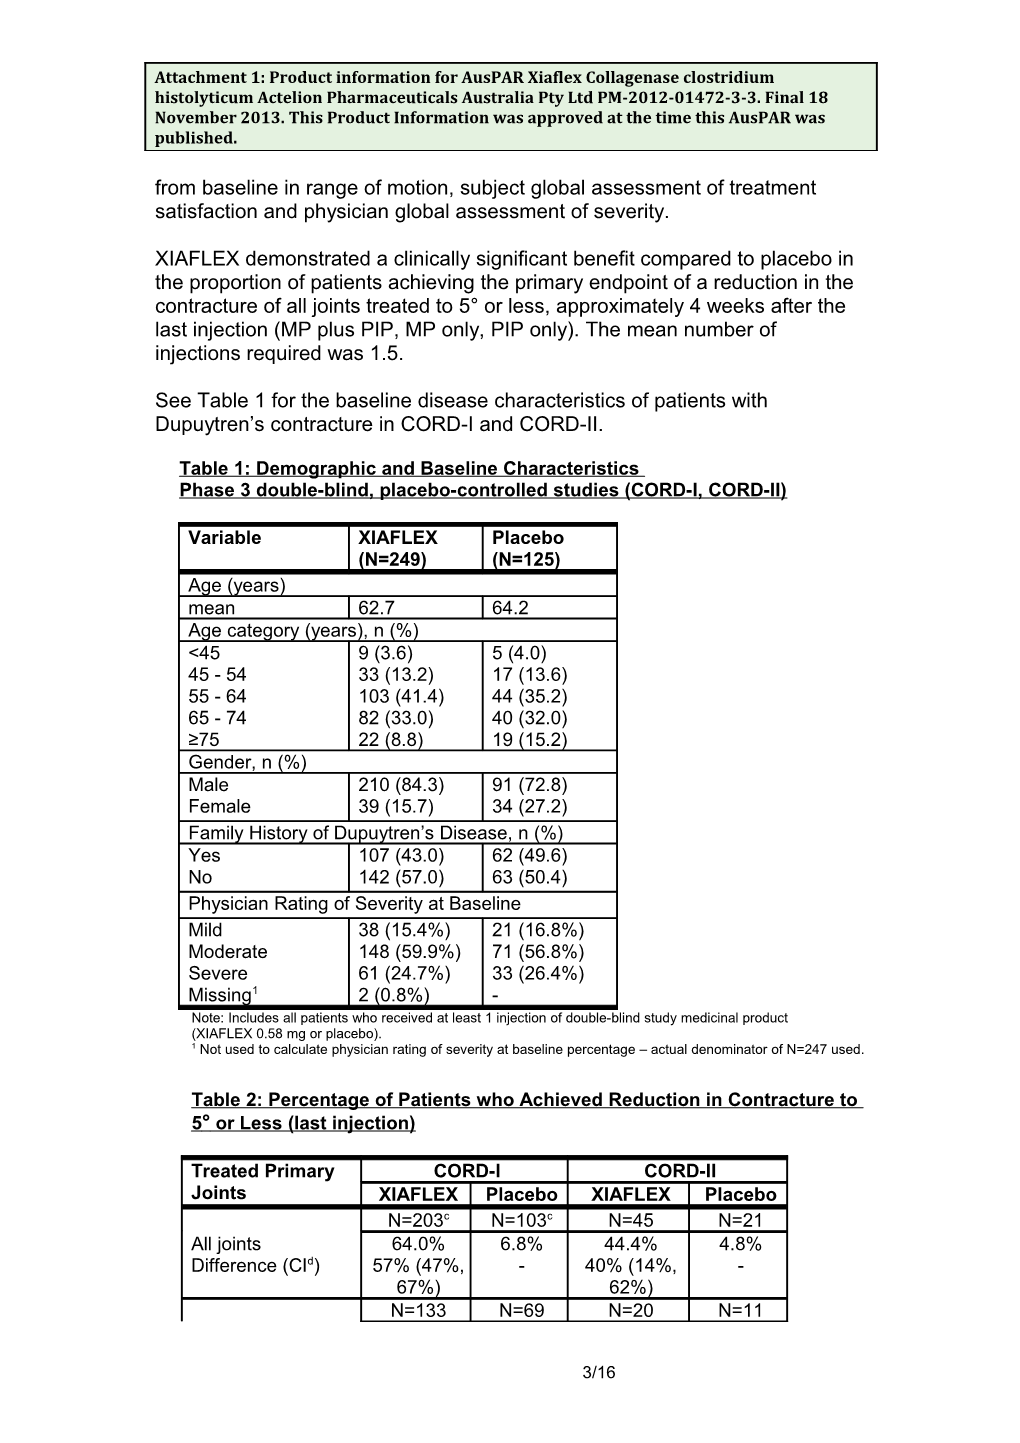 Attachment 1. Product Information for Collagenase Clostridium Histolyticum